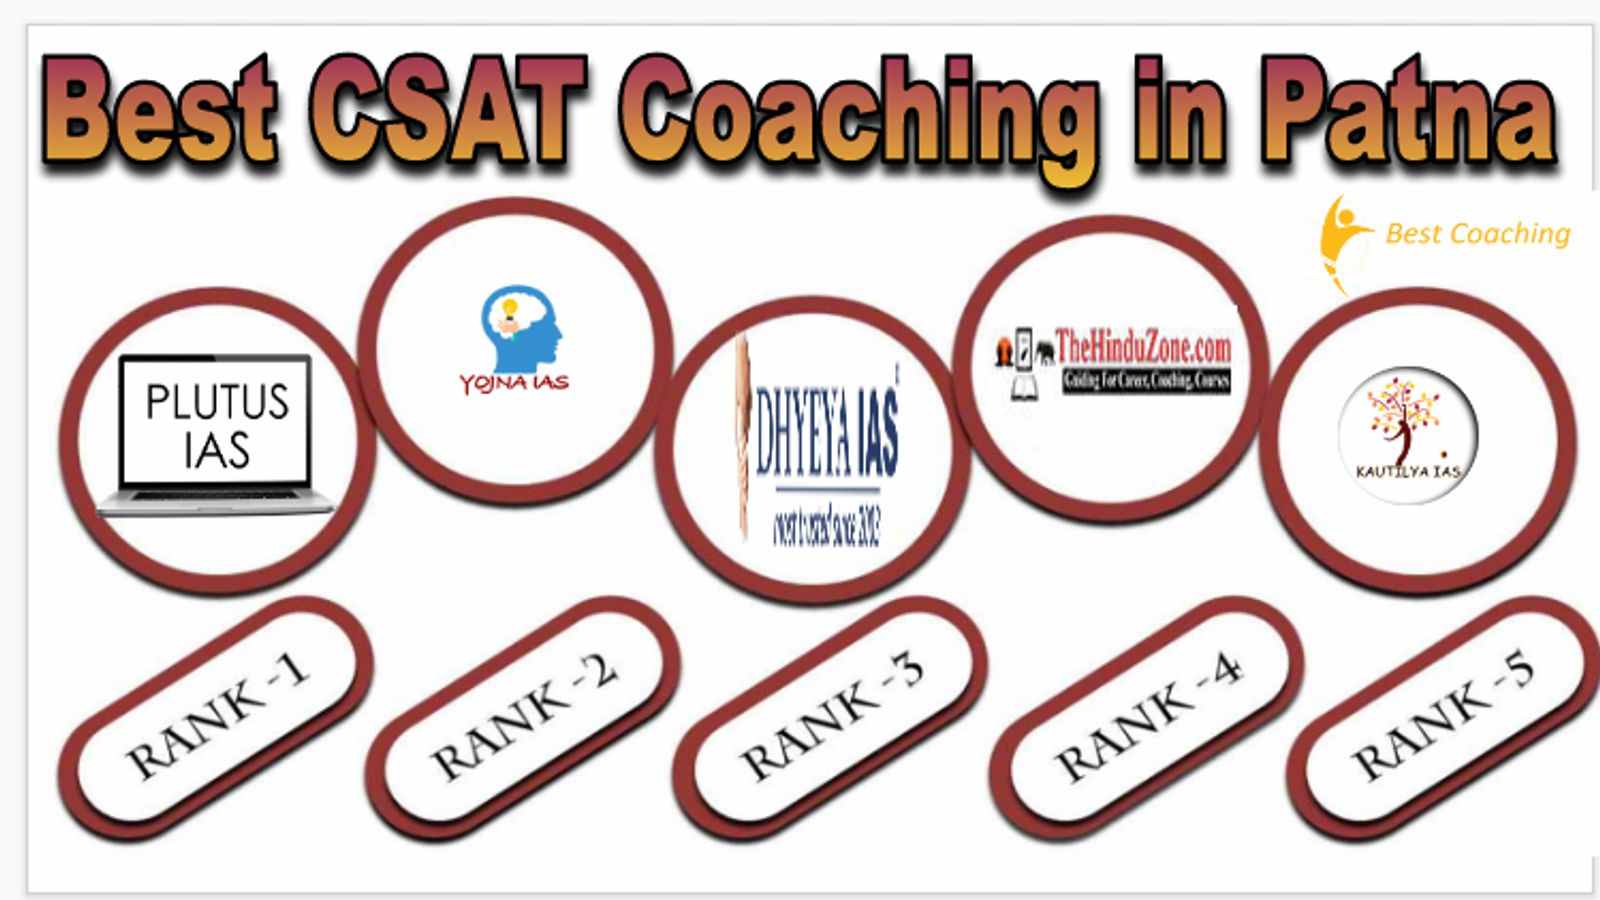 Best CSAT Coaching in Patna